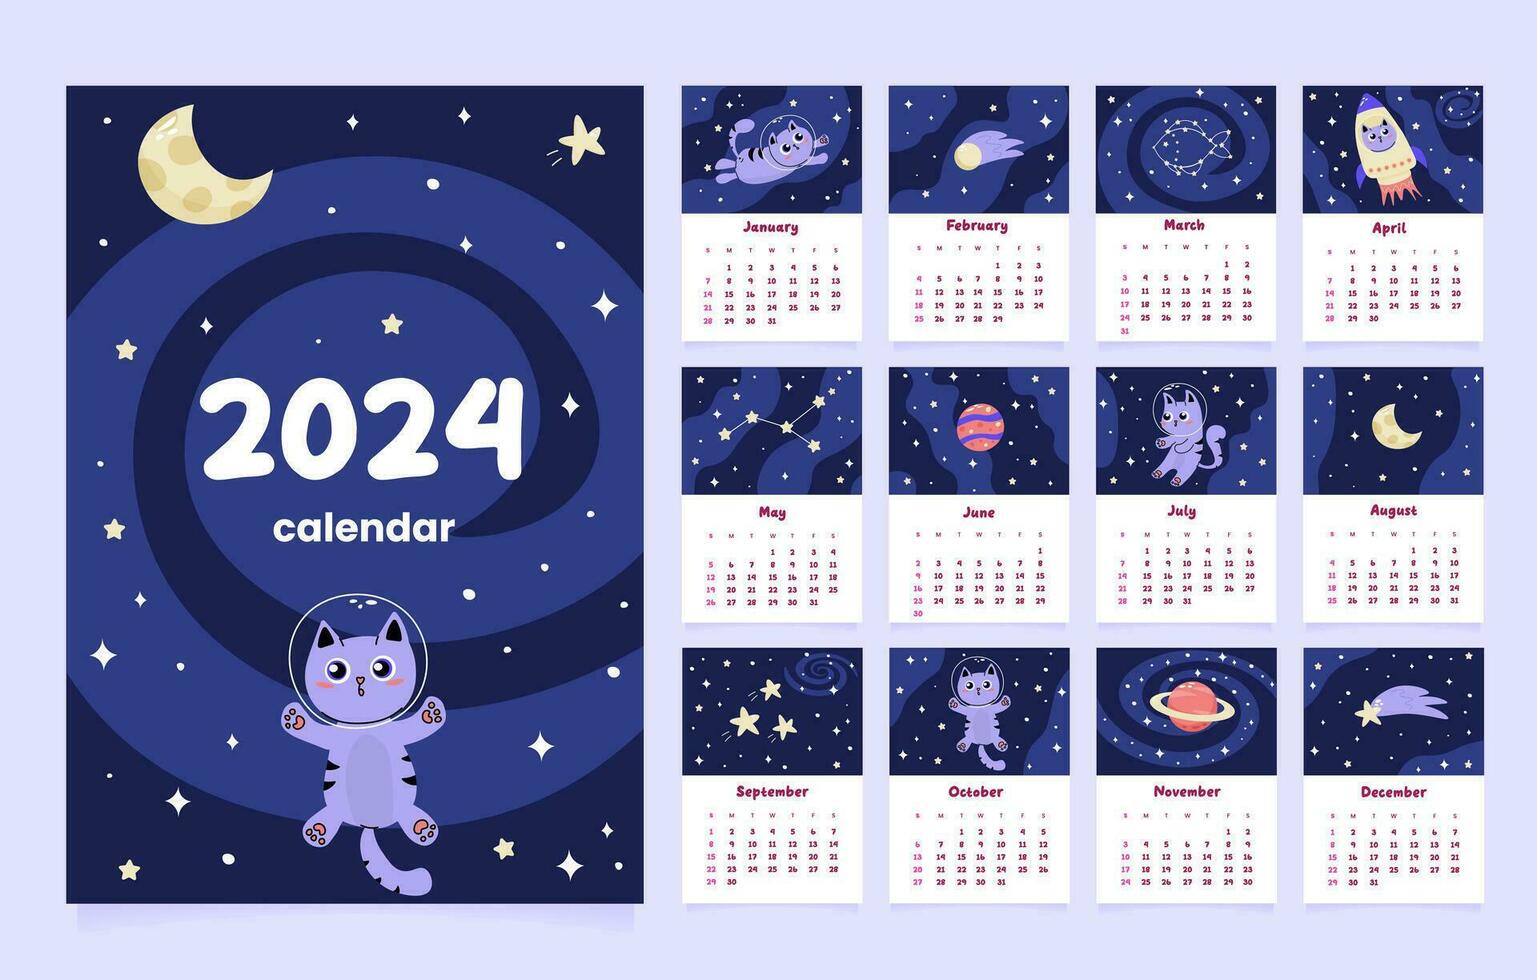 Calendar 2024 template with cute cat astronaut vector